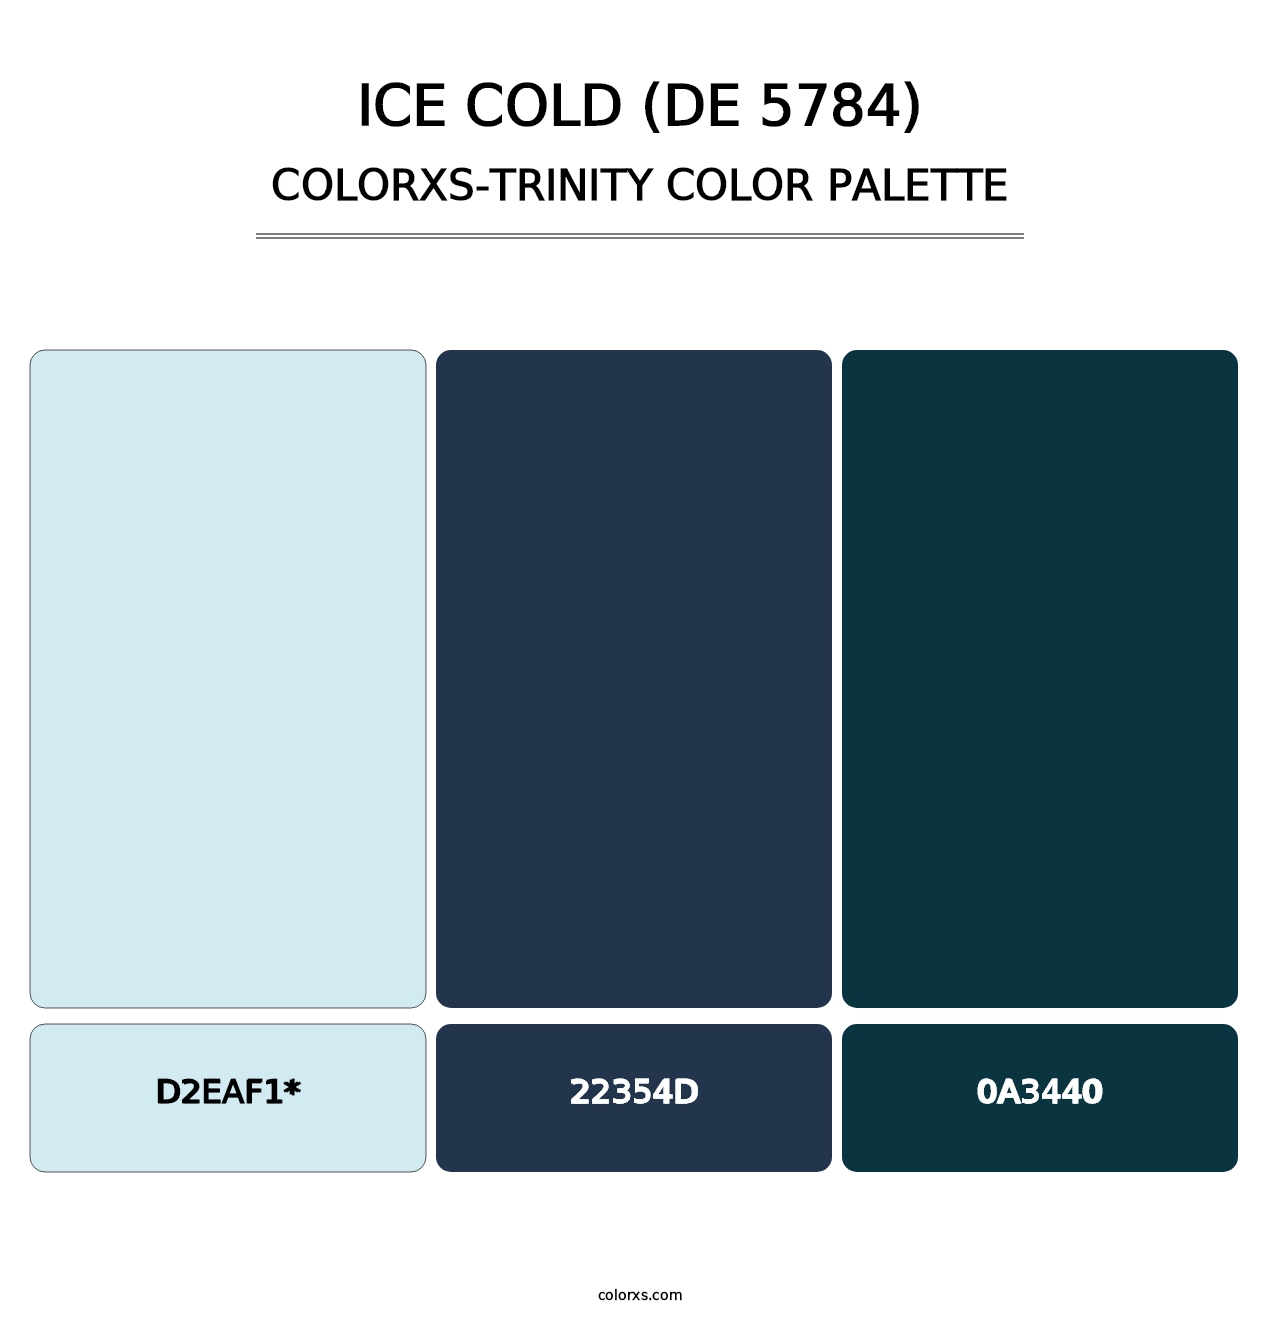 Ice Cold (DE 5784) - Colorxs Trinity Palette